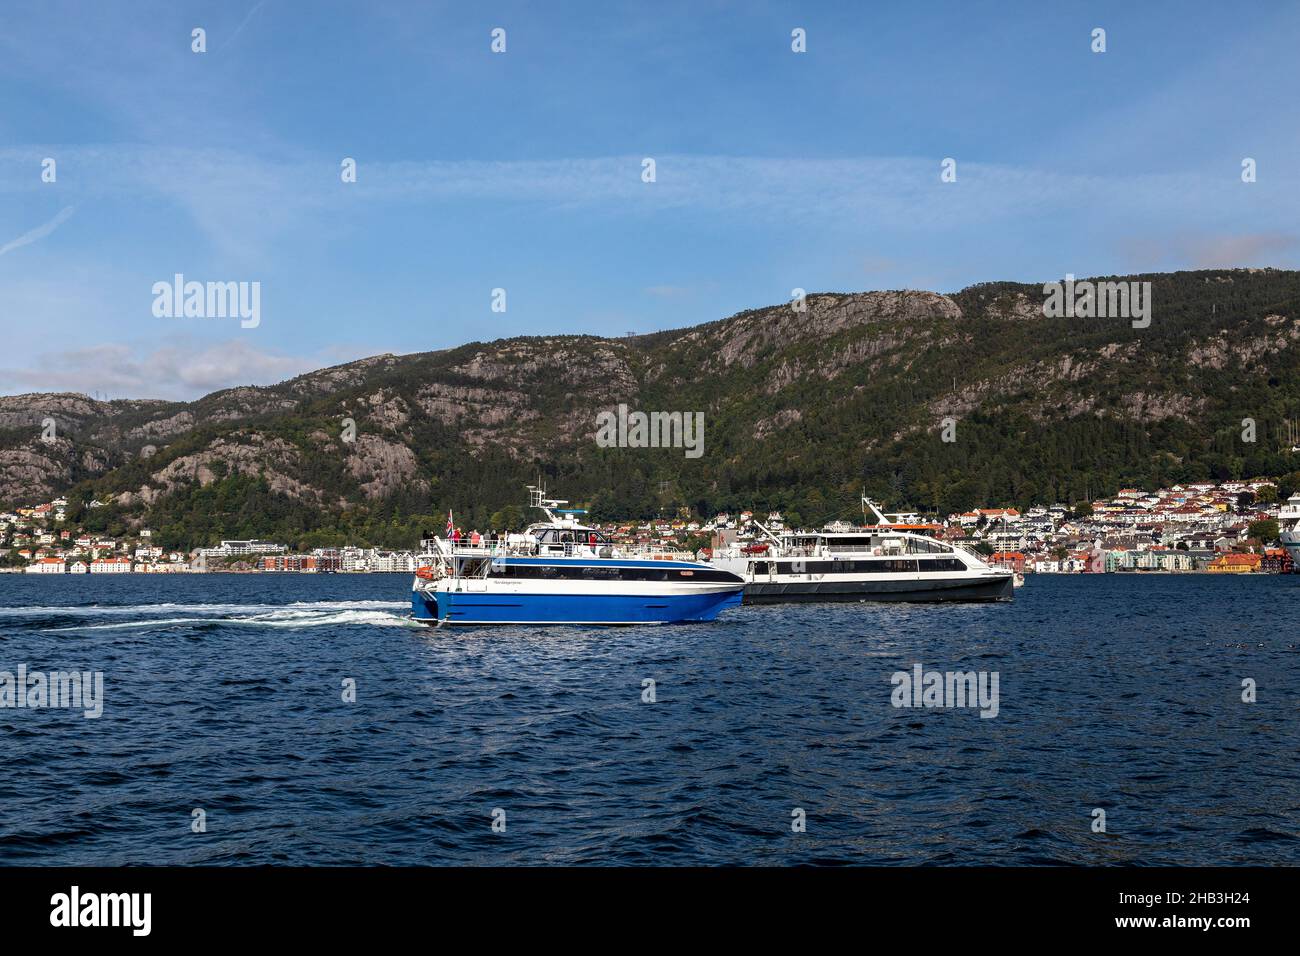 Catamarani passeggeri ad alta velocità Ekspressen e hardangerprins a Byfjorden, arrivando all'ingresso del porto di Bergen, Norvegia Foto Stock